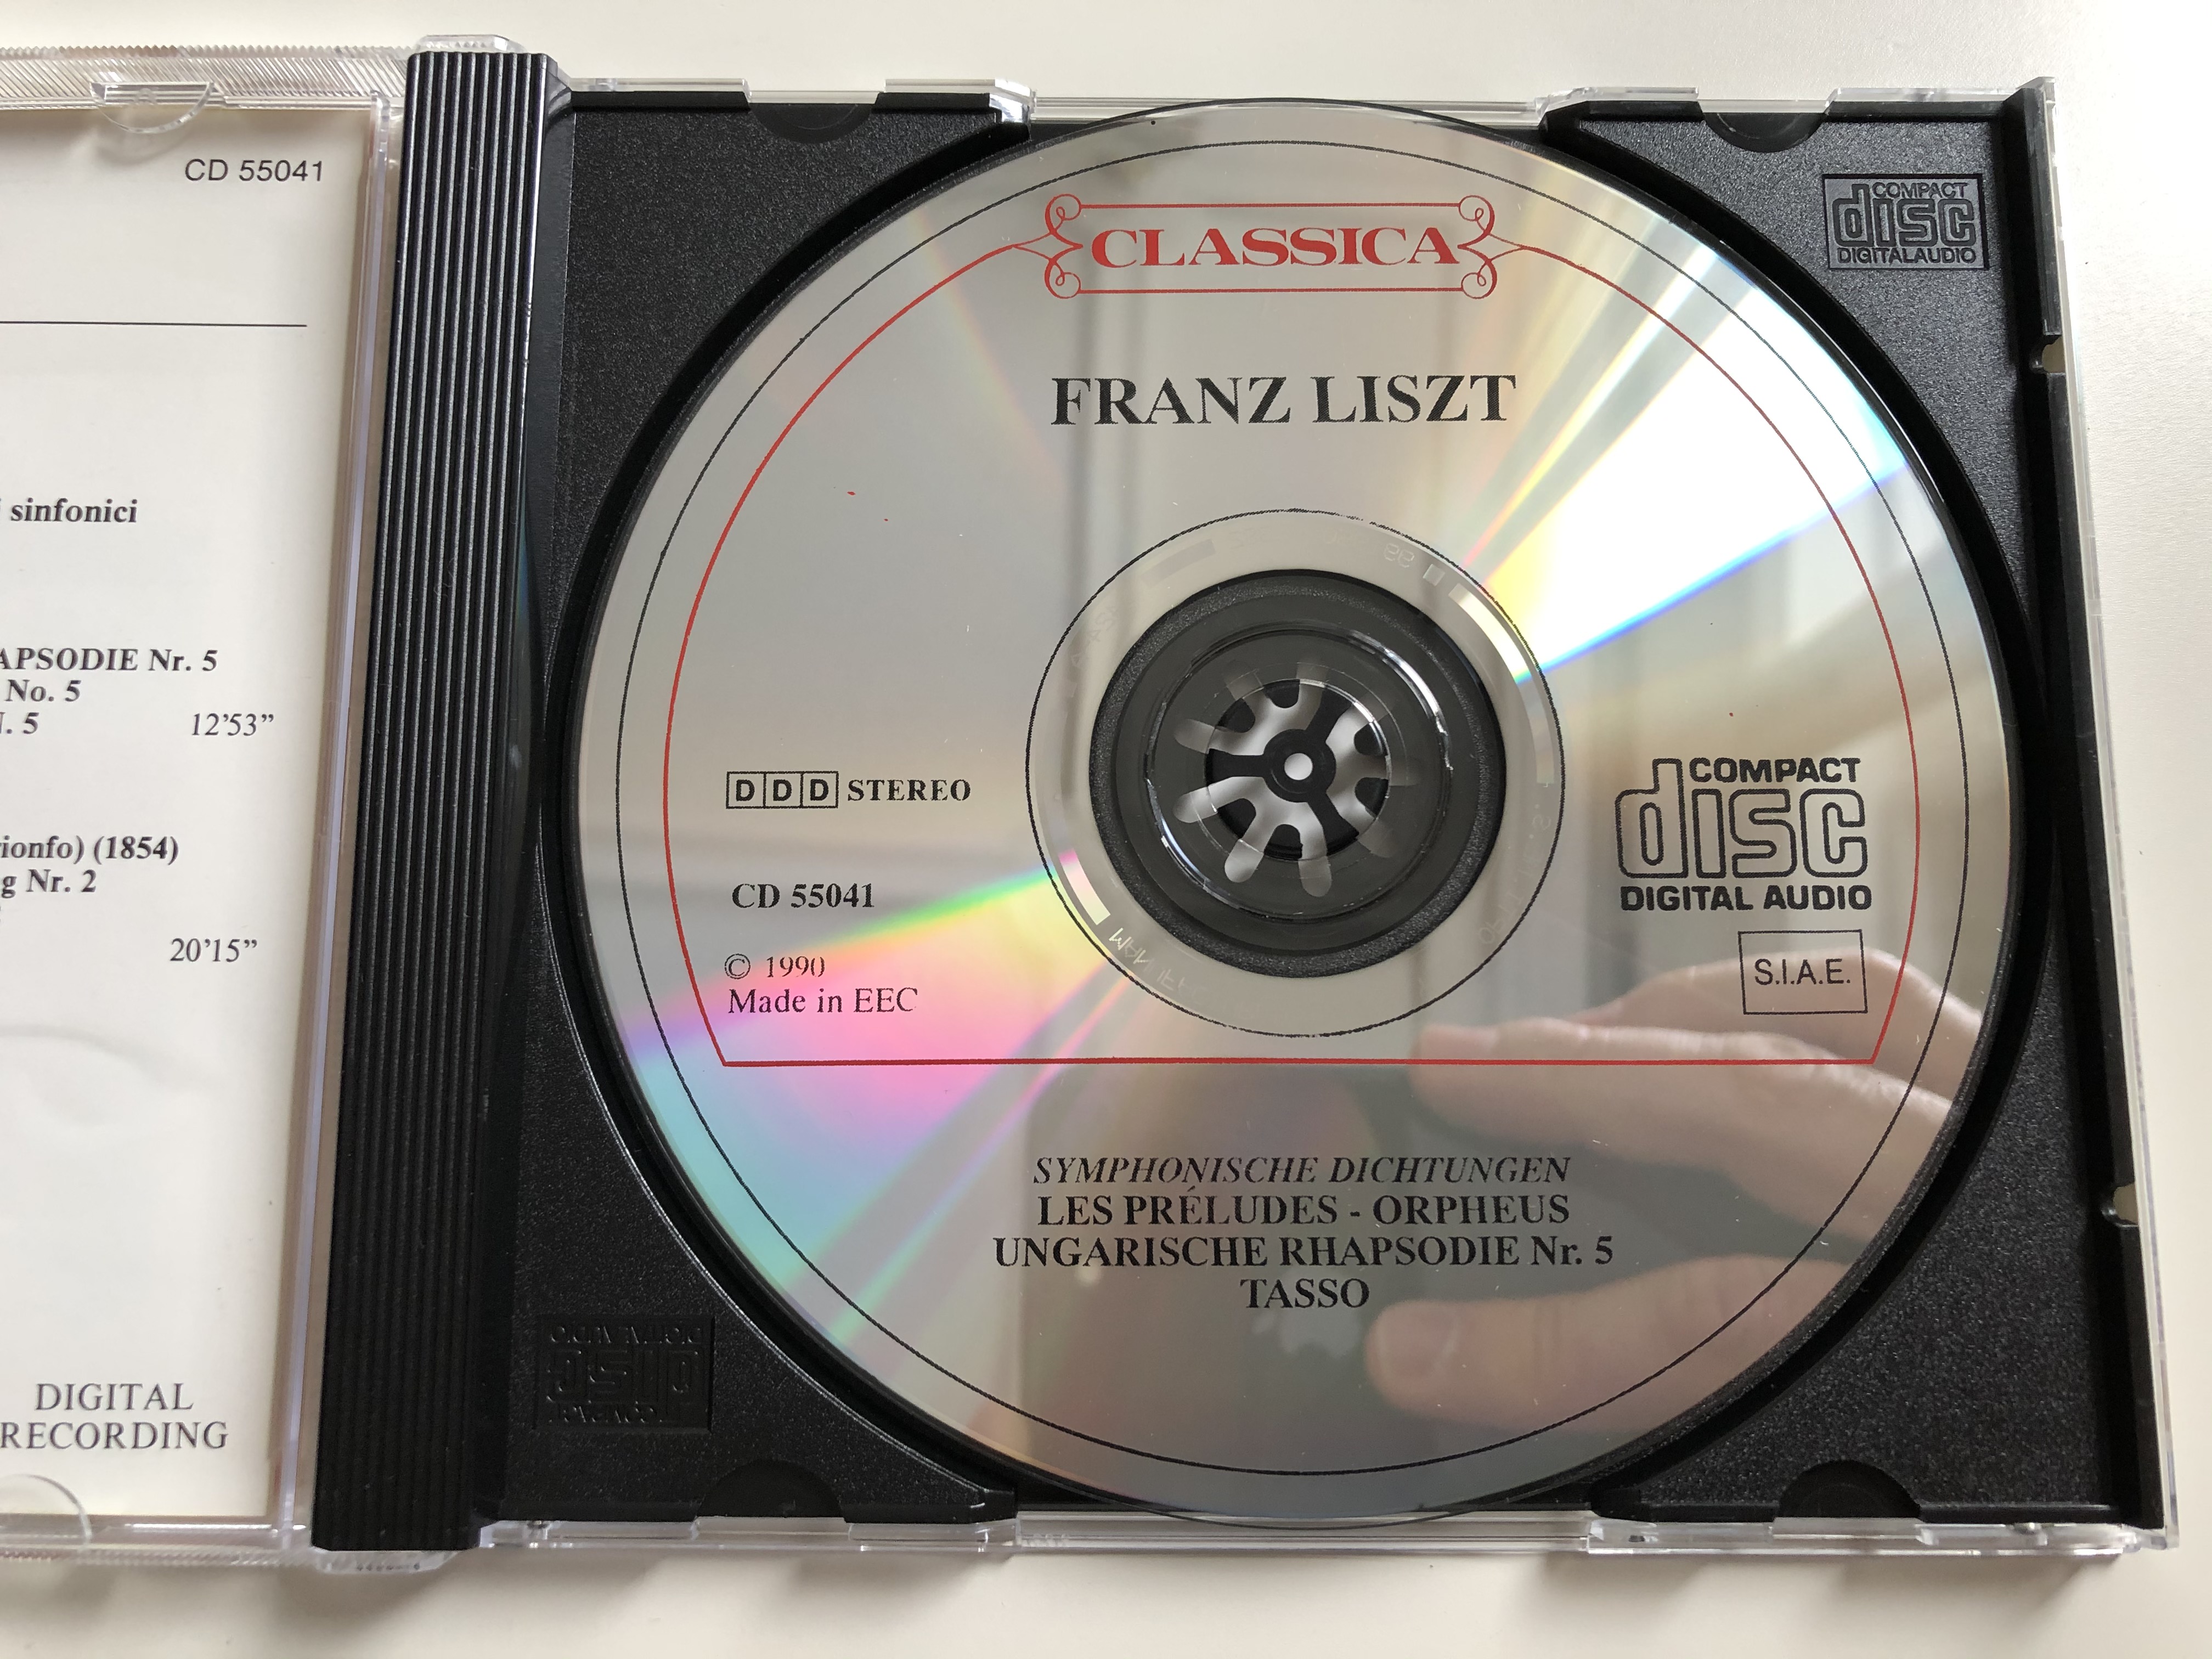 franz-liszt-symphonische-dichtungen-les-preludes-orpheus-tasso-ungarische-rhapsodie-nr.-5-london-festival-orchestra-alfred-scholz-eec-audio-cd-1990-stereo-cd-55041-3-.jpg